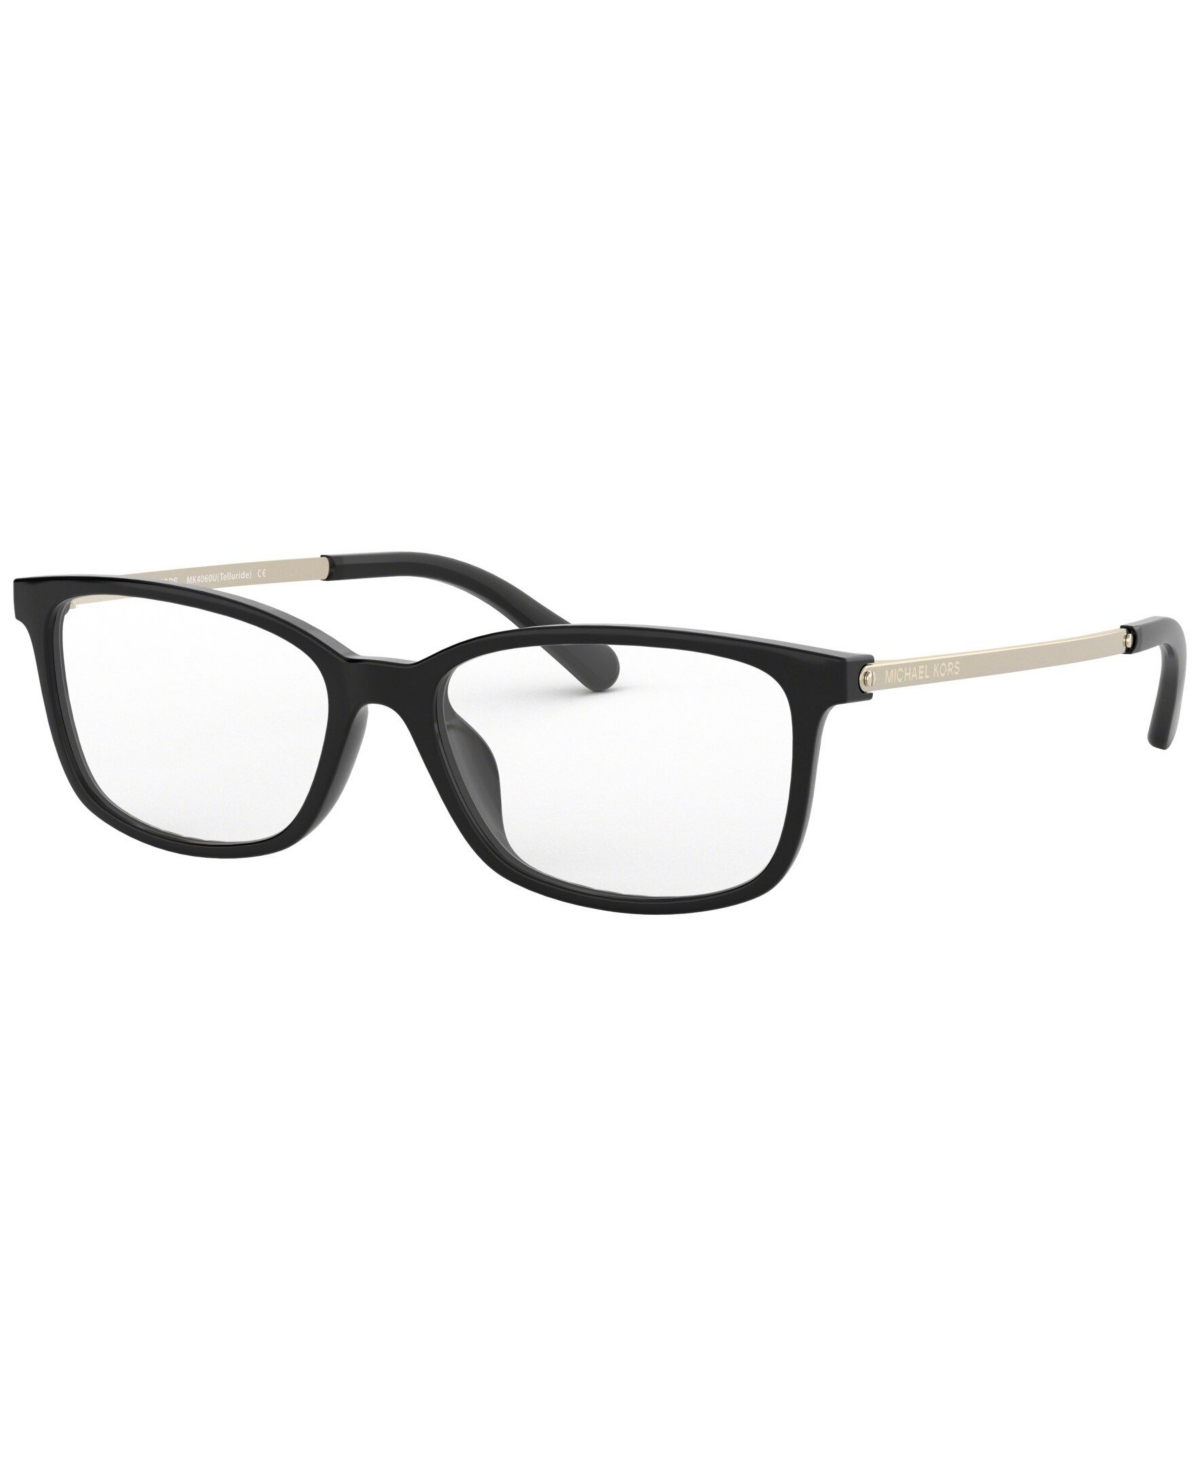 Women's Rectangle Telluride Eyeglasses, MK4060U54-o - Cordovan